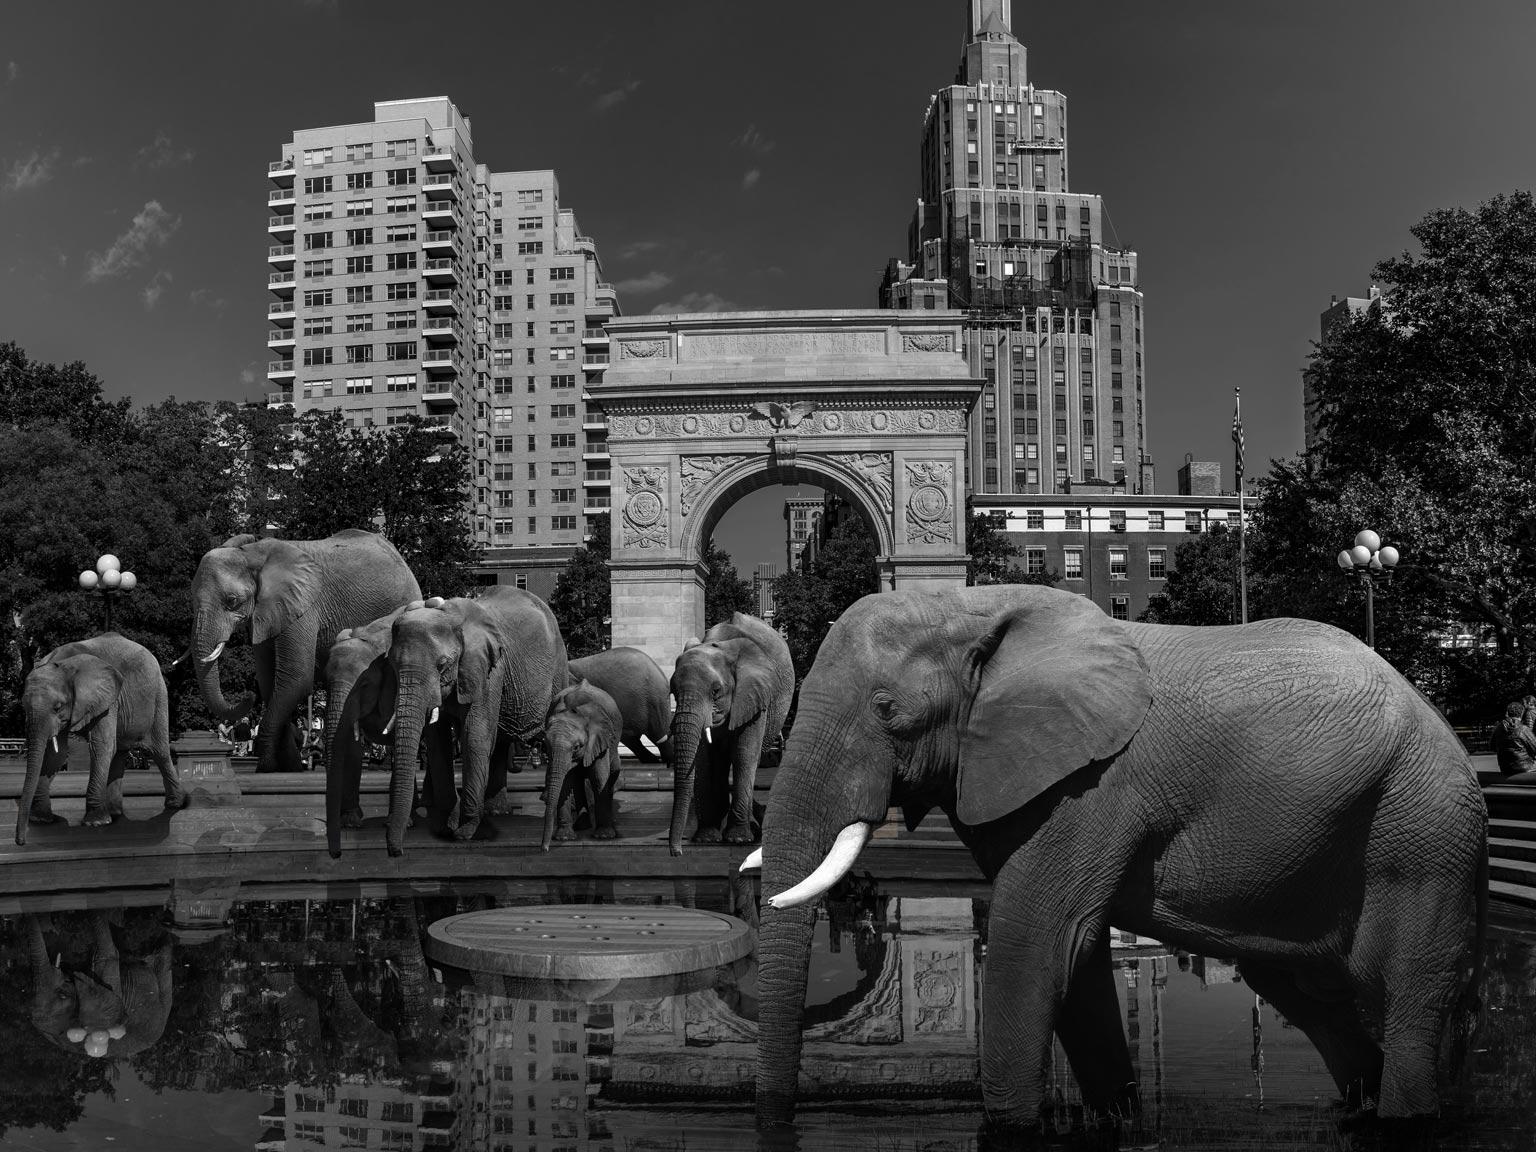 Gillie and Marc Schattner Animal Print - Black White Animal Photography - Pop Art Print - Elephants staying cool